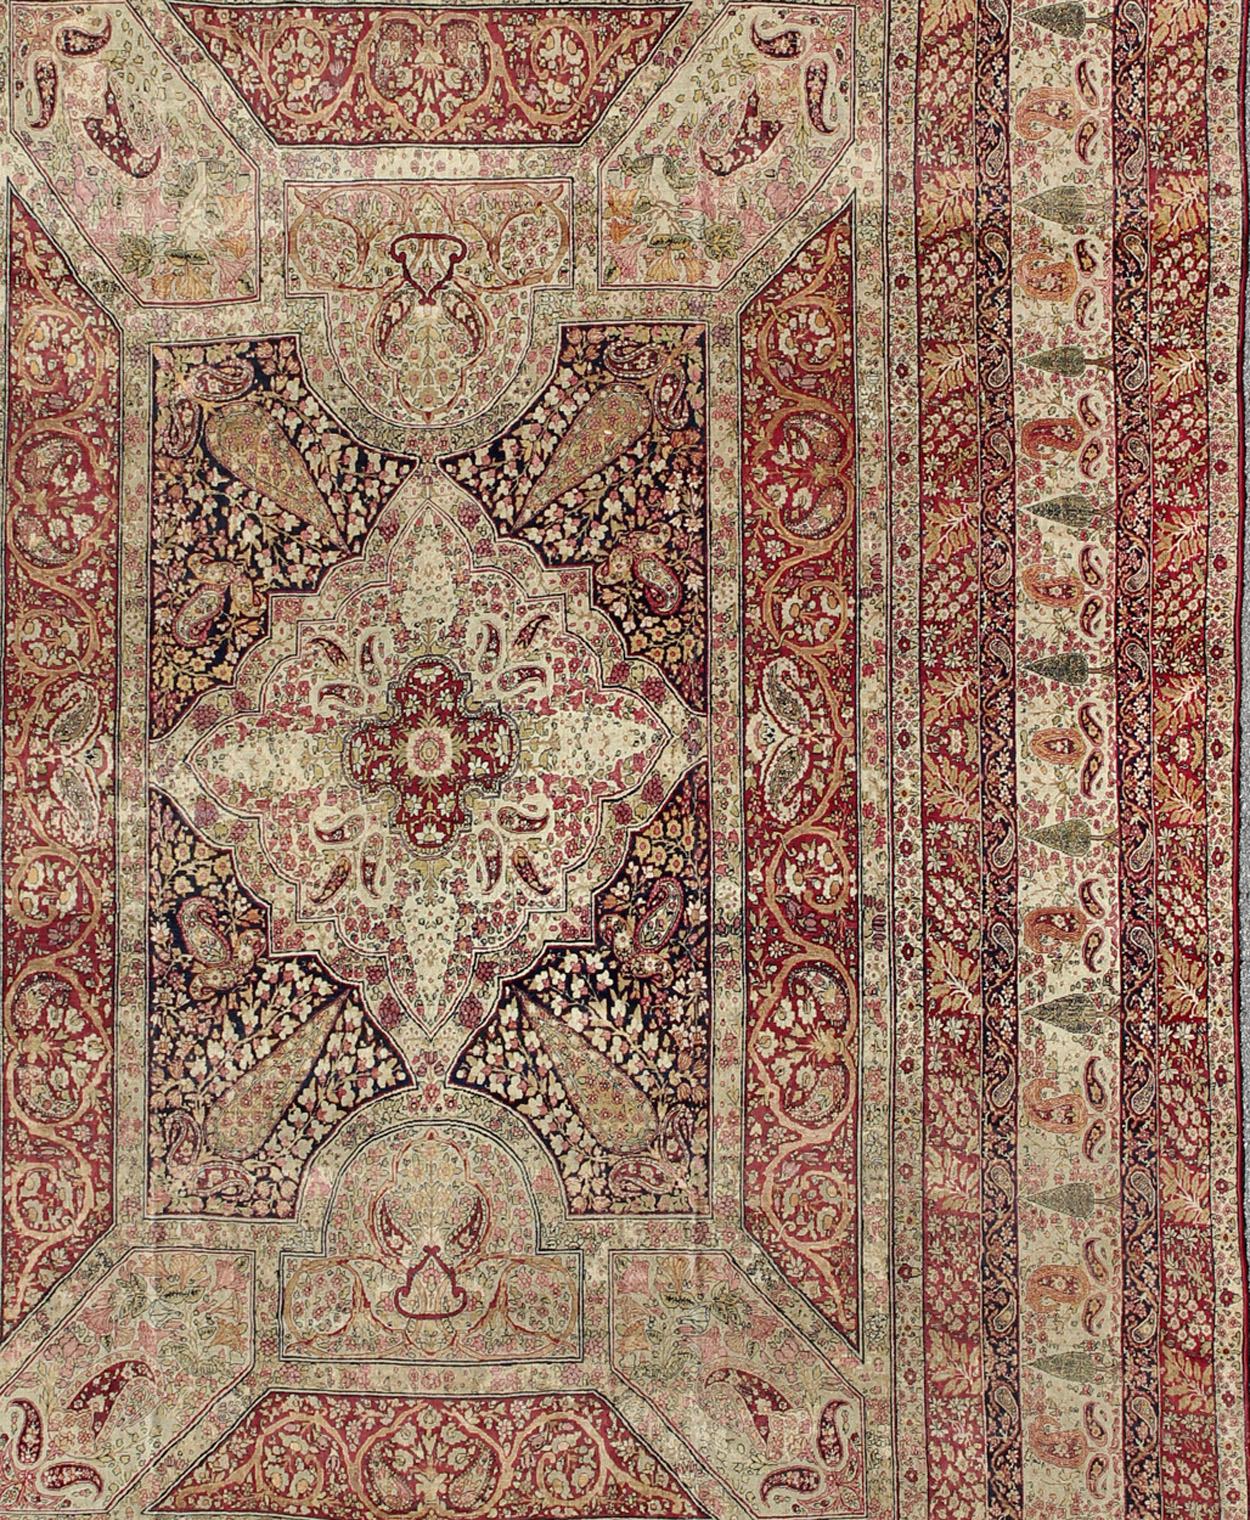 Large antique Persian Lavar Kerman large rug with incredible details, rug / E-1210. Antique large Persian rug. Antique Persian Lavar Kerman, large rug with intricate details
This magnificent antique Lavar Kerman carpet is a stunning achievement of